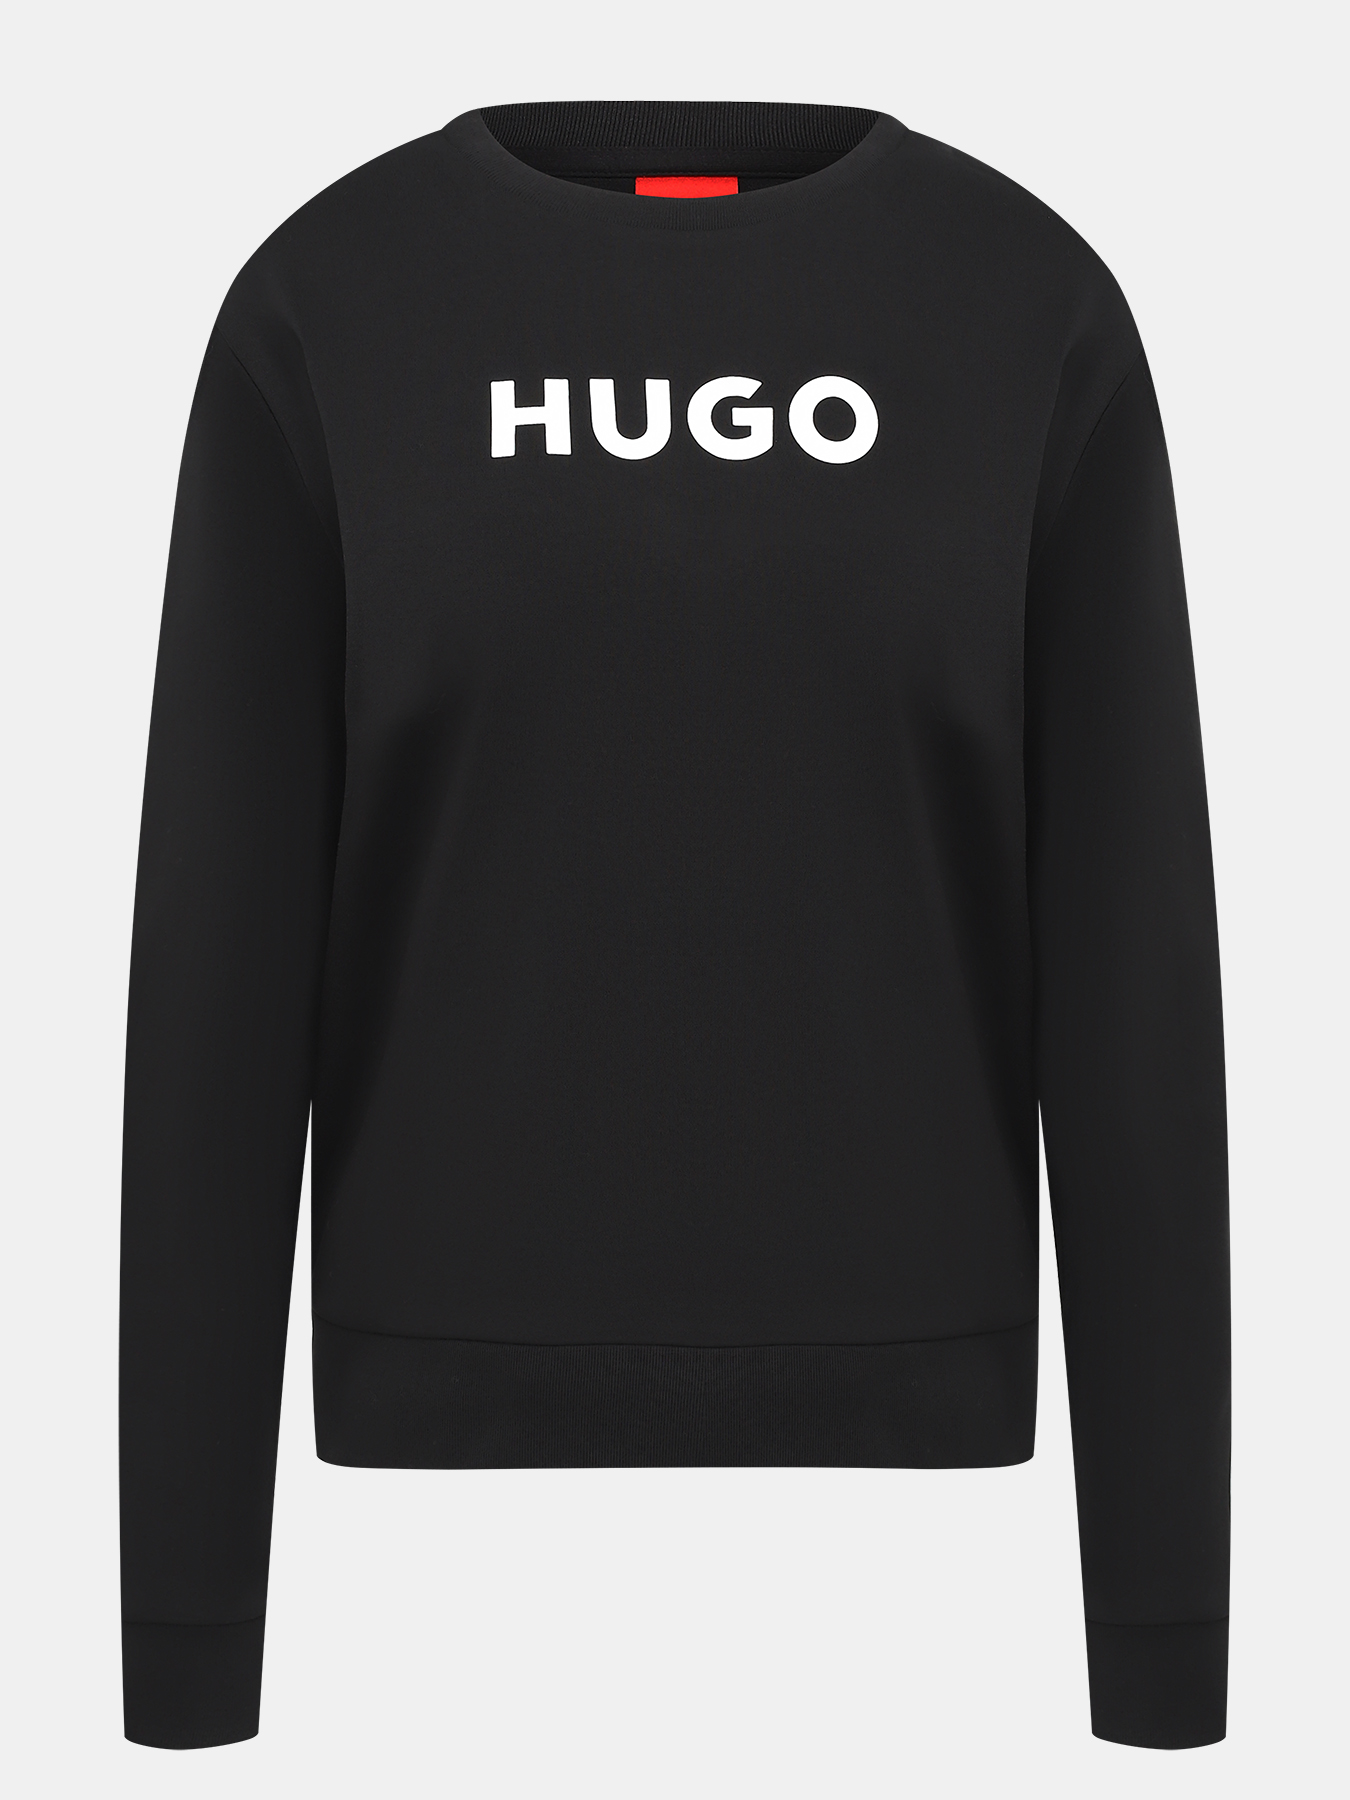 Свитшот The Hugo HUGO 429386-045